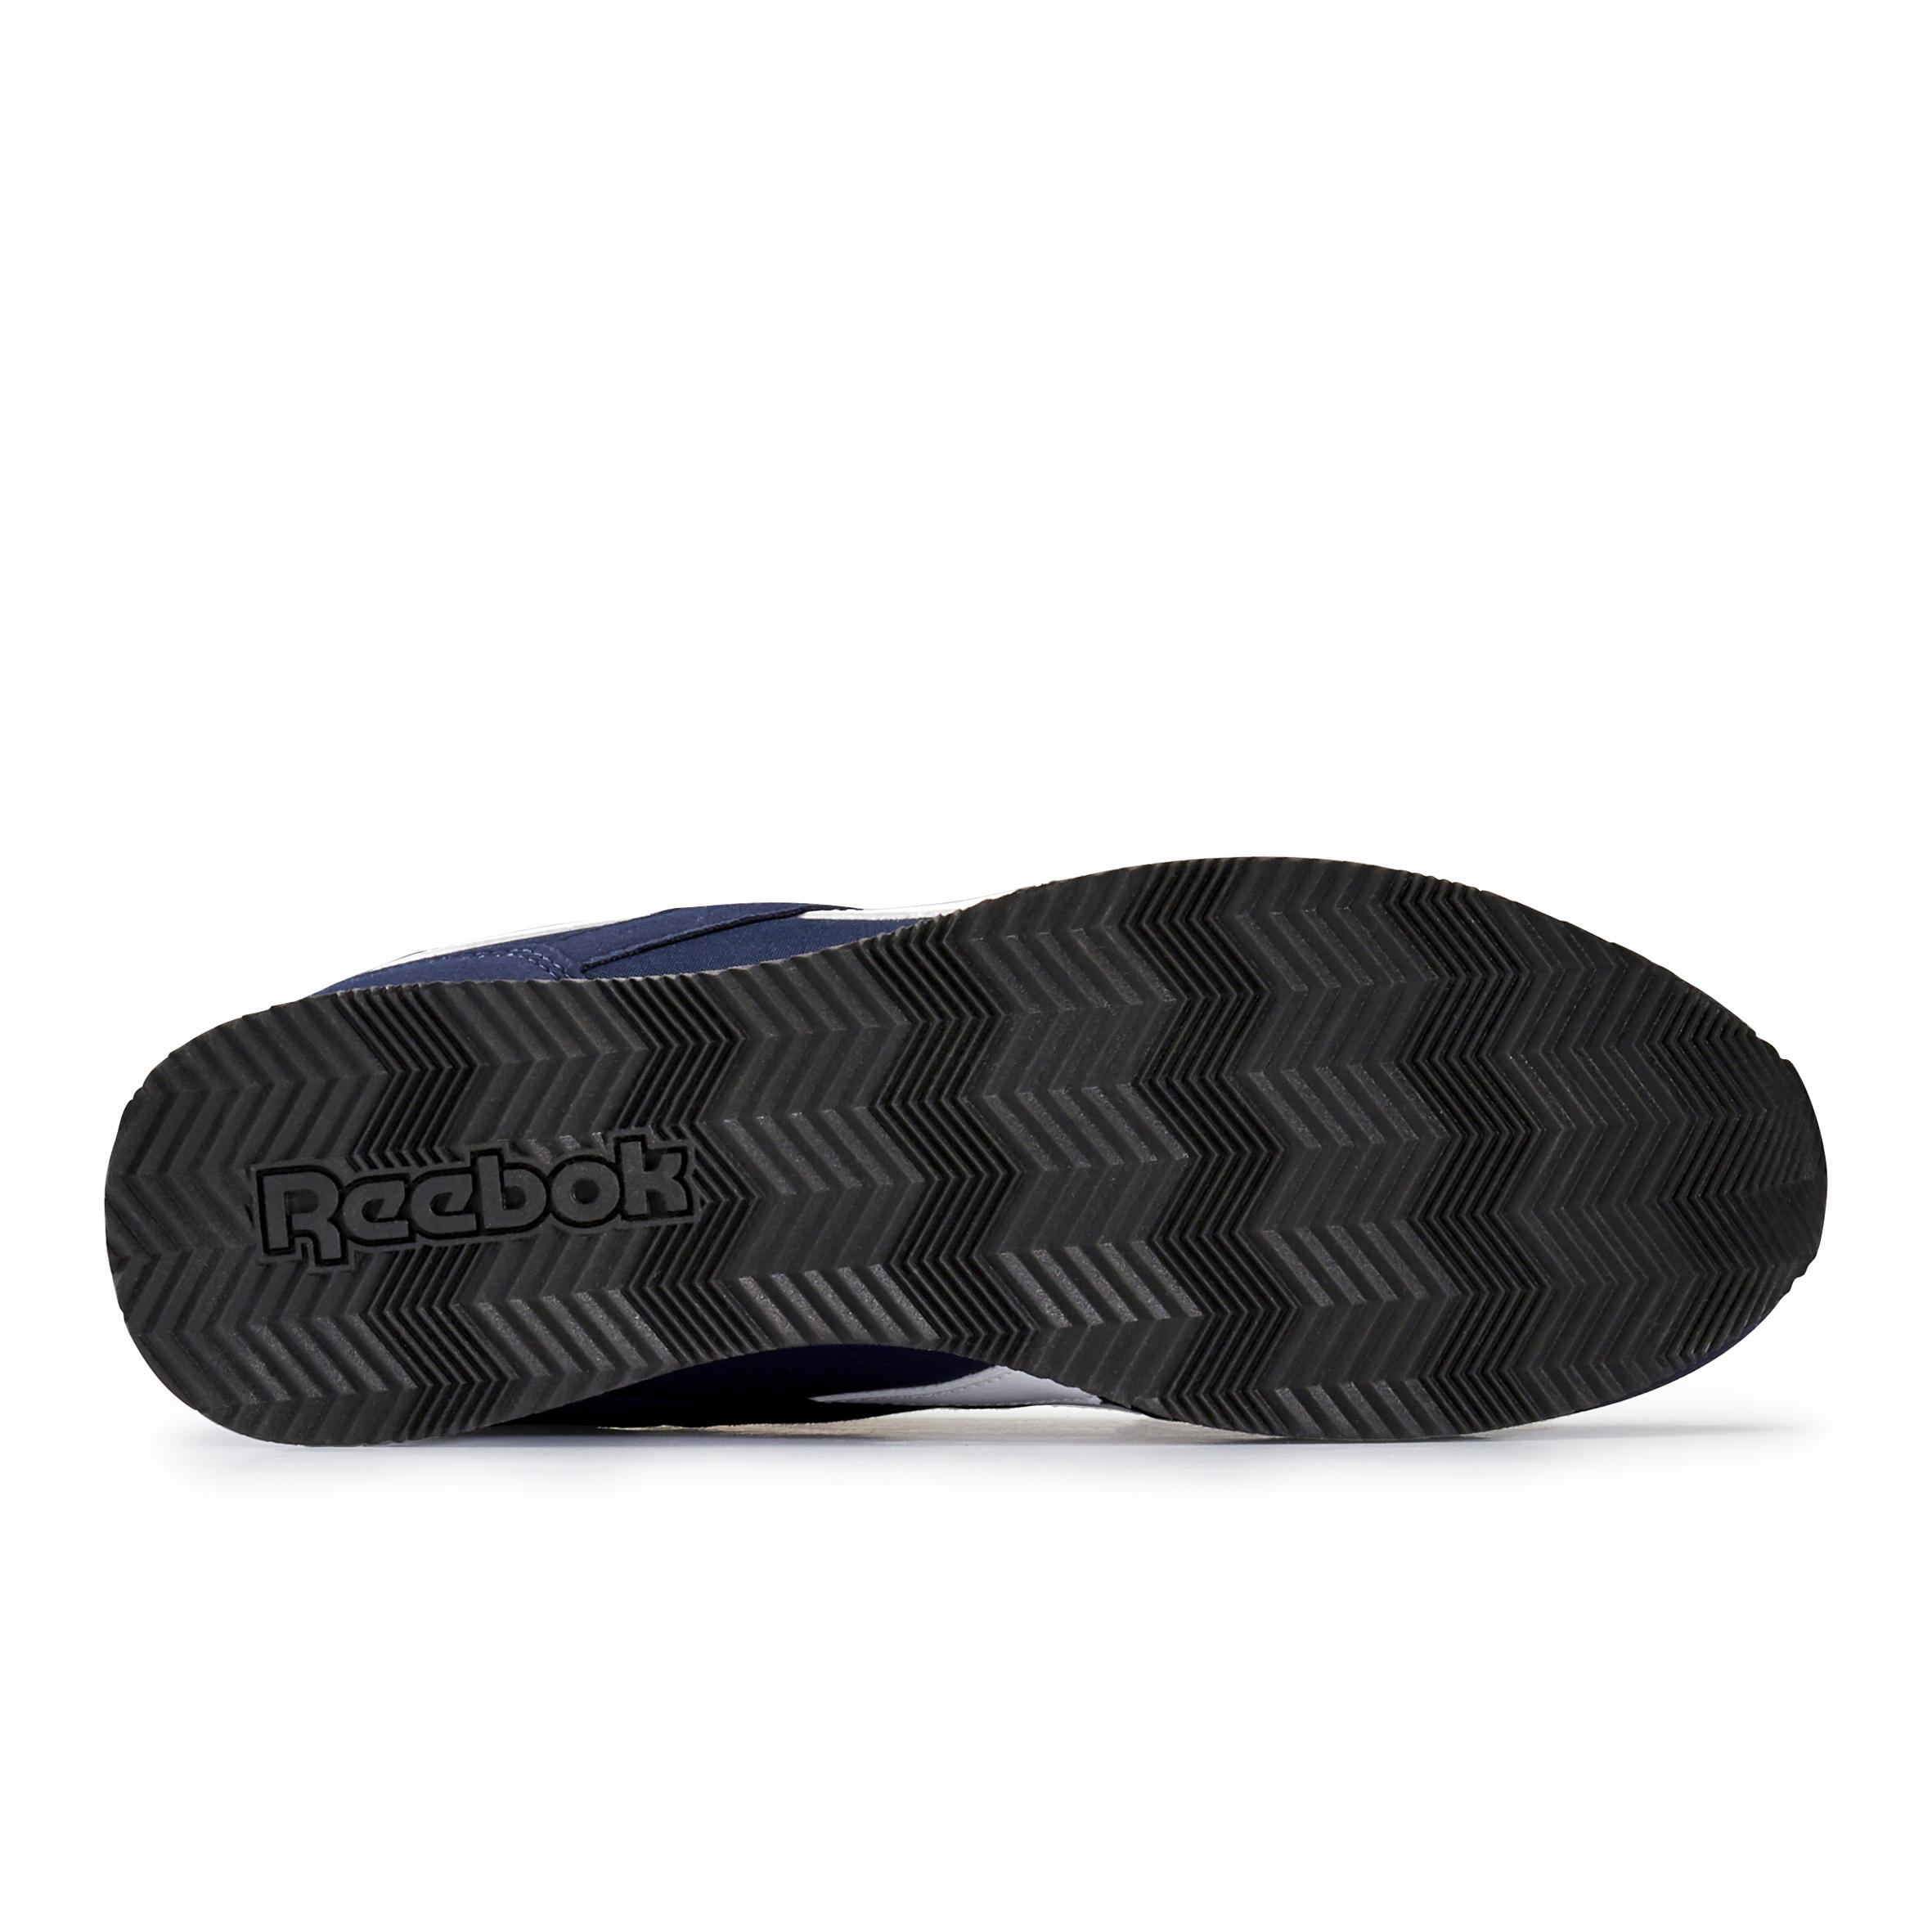 Men's Urban Walking Shoes Reebok Royal Classic - blue 5/8